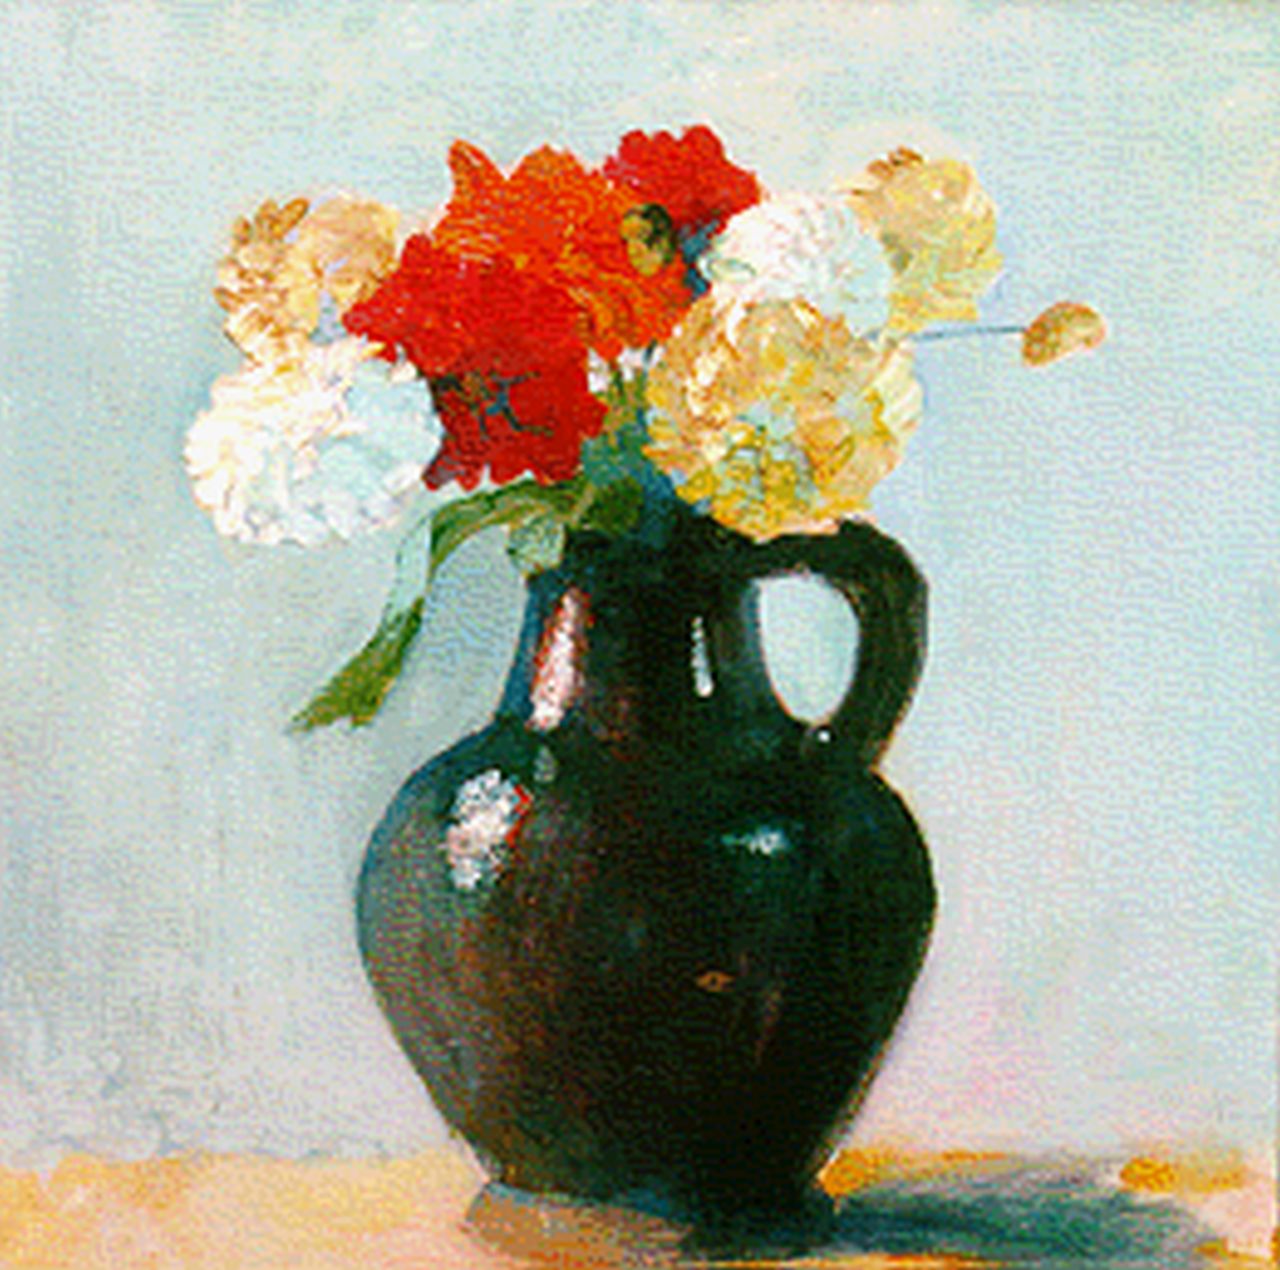 Hogerwaard G.  | Georges 'George' Hogerwaard, A flower still life, oil on canvas 65.0 x 60.0 cm, signed l.r.